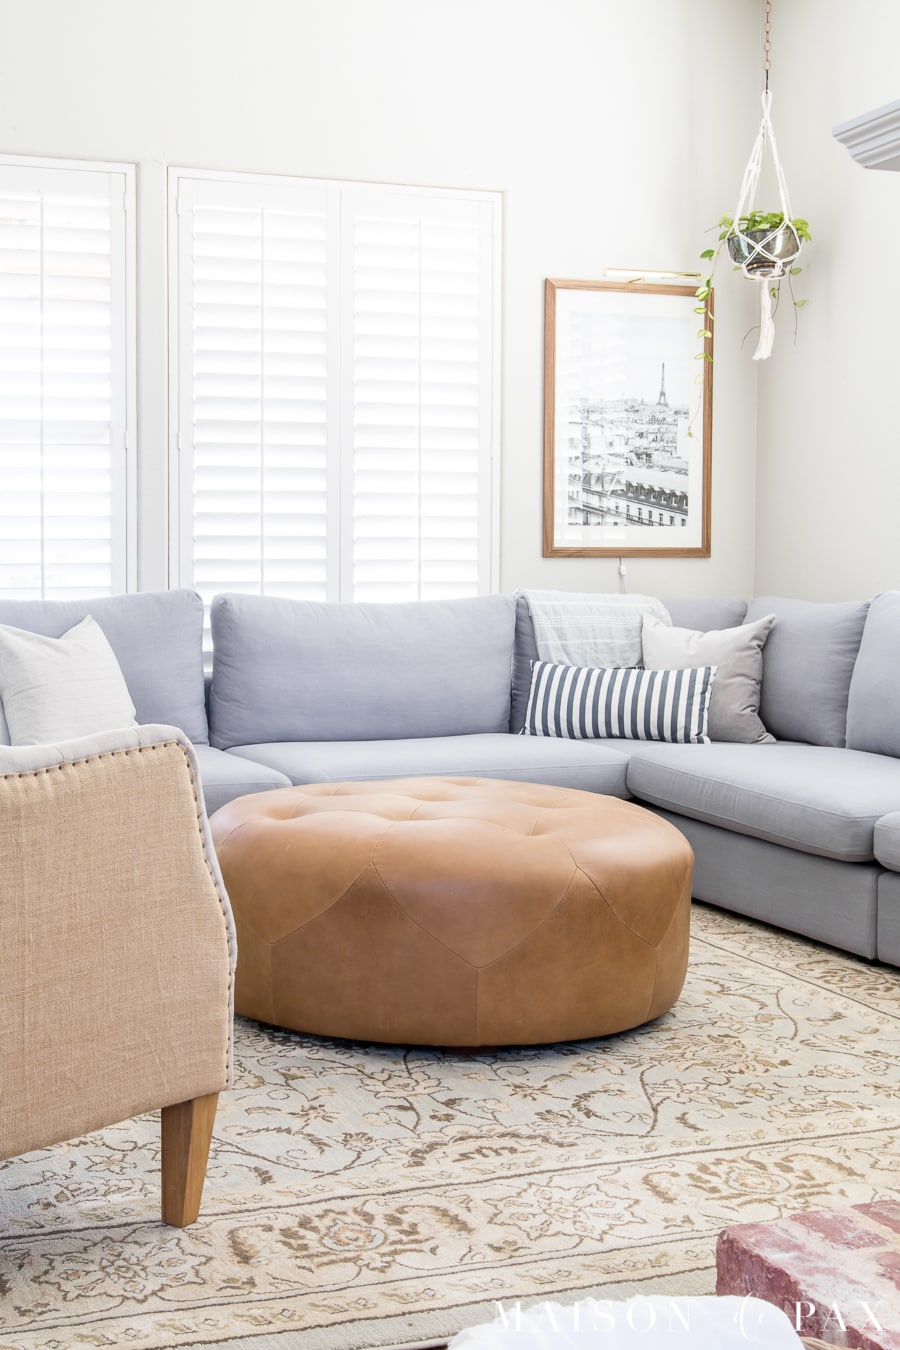 Bright living room design with sectional- Maison de Pax